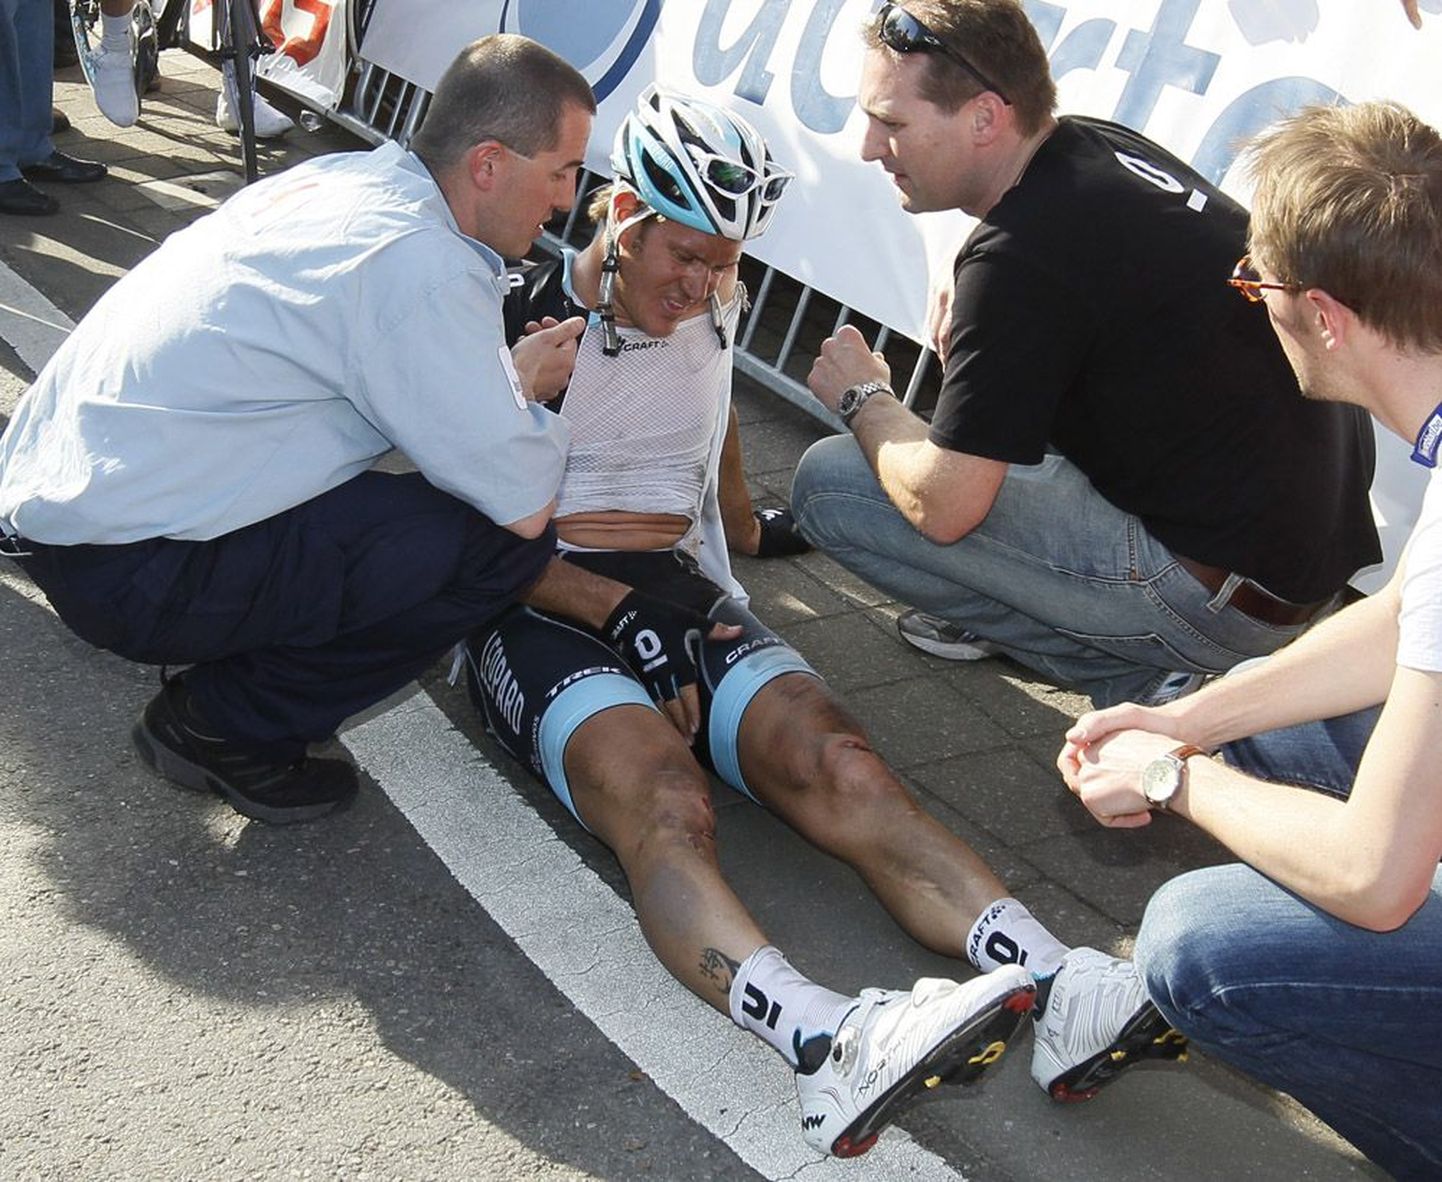 Wouter Weylandt kukkus ka 6. aprillil peetud Scheldeprijsi GP-sõidul. Eilne kukkumine Giro kolmandal etapil lõpetas aga noore mehe elu.